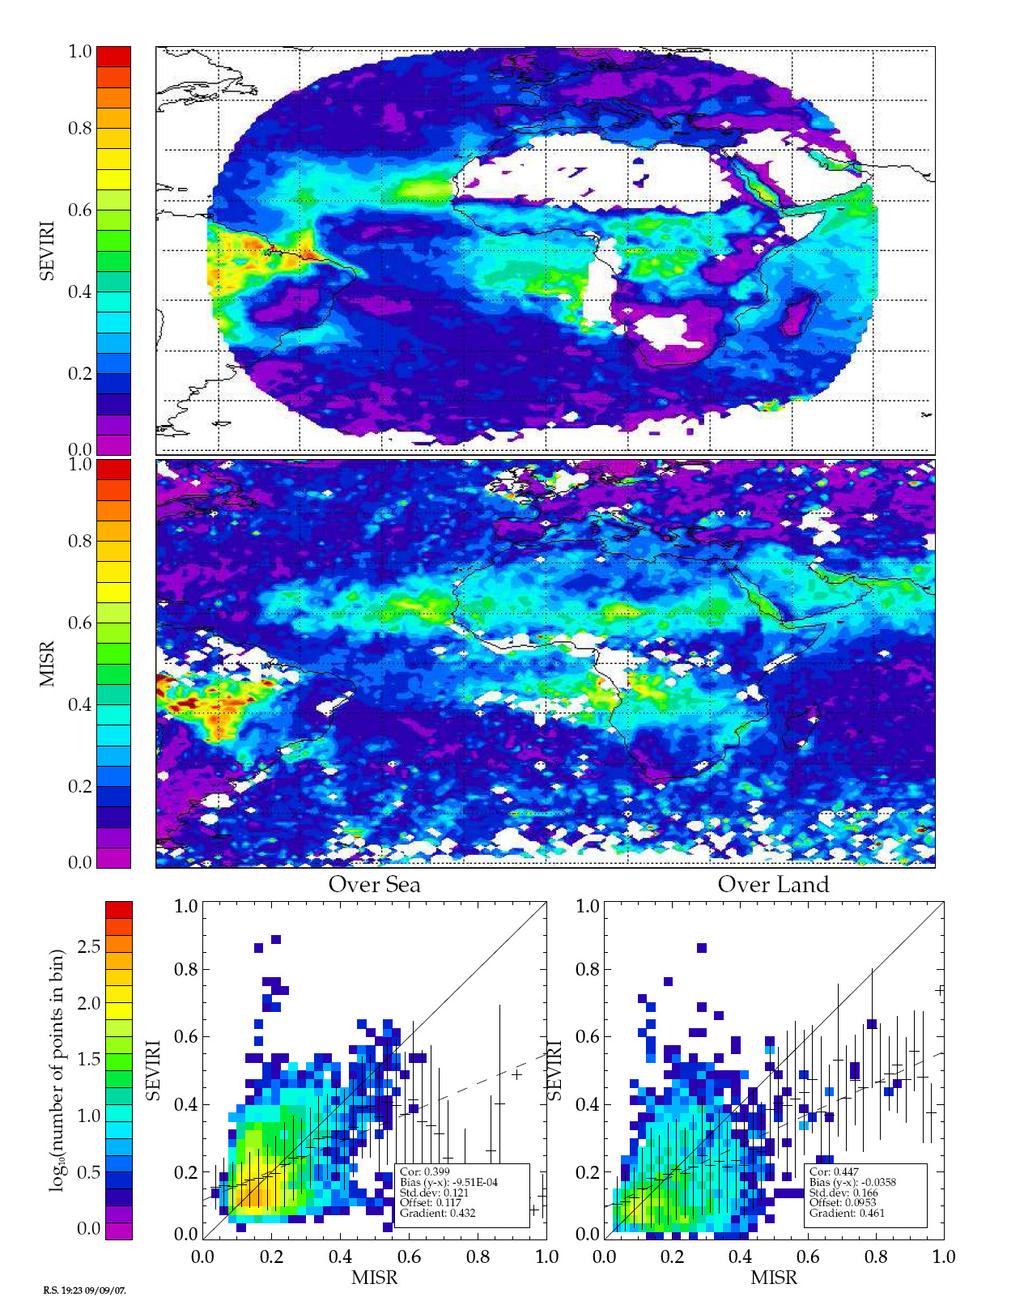 SEVIRI aerosol optical thickness comparisons with MODIS